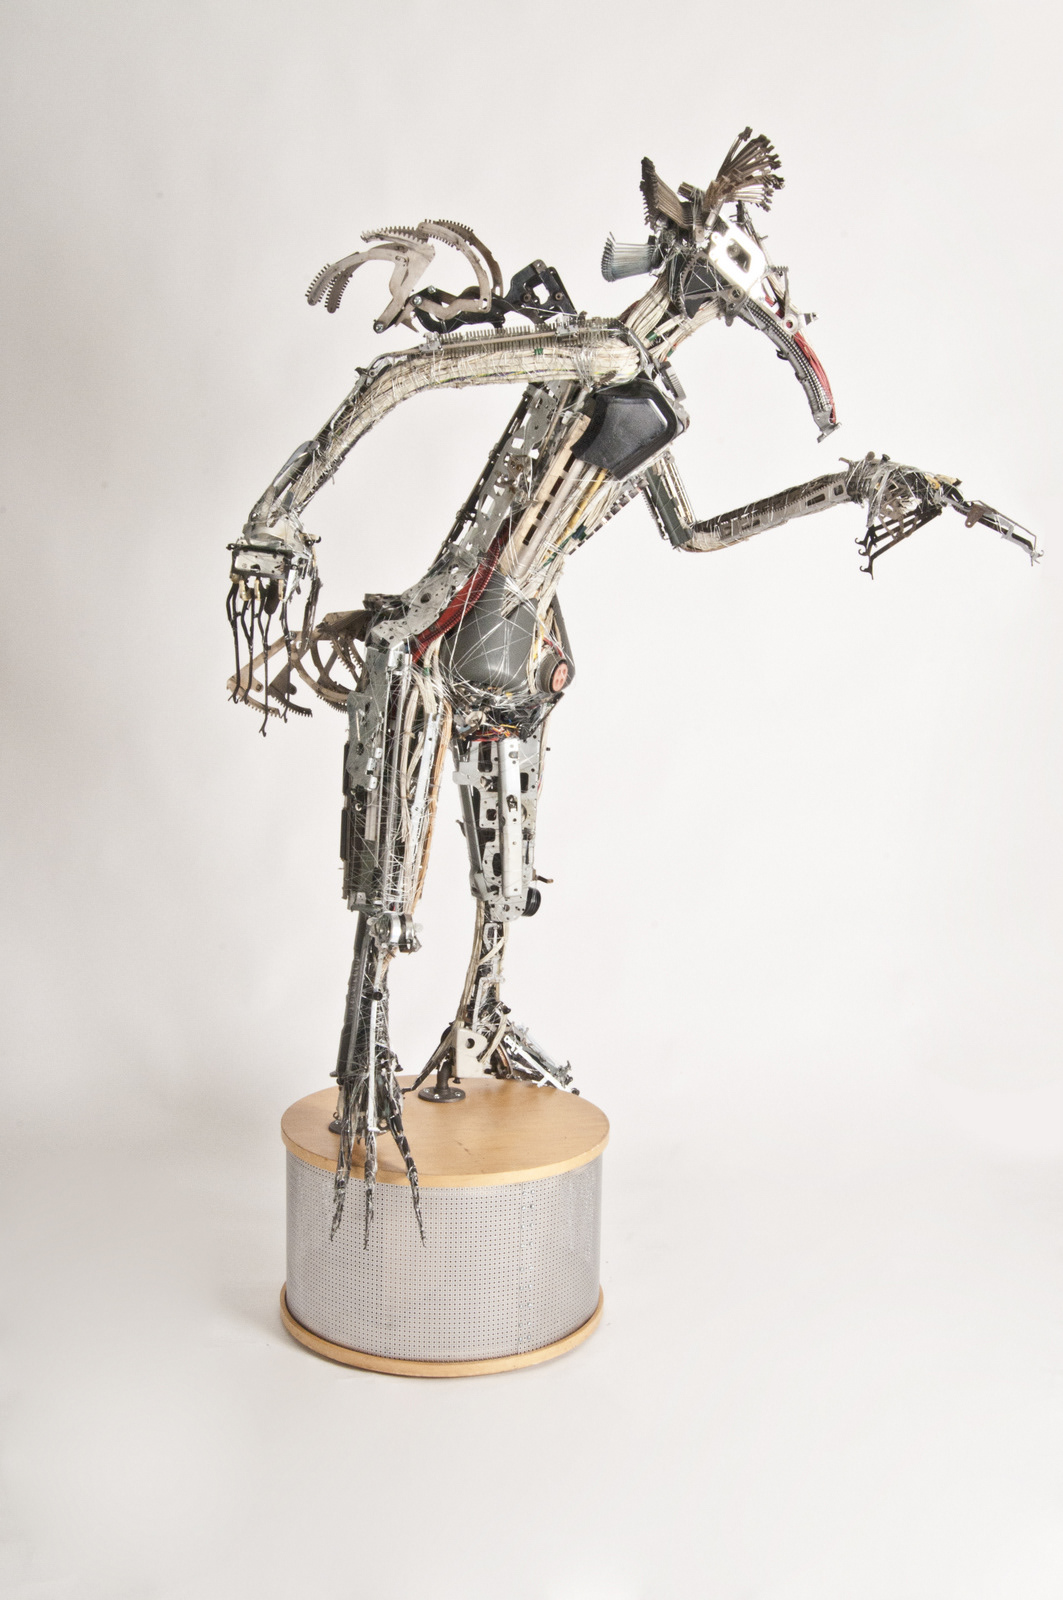 bird upcycled junkart sculpture gabriel dishaw birdman robot